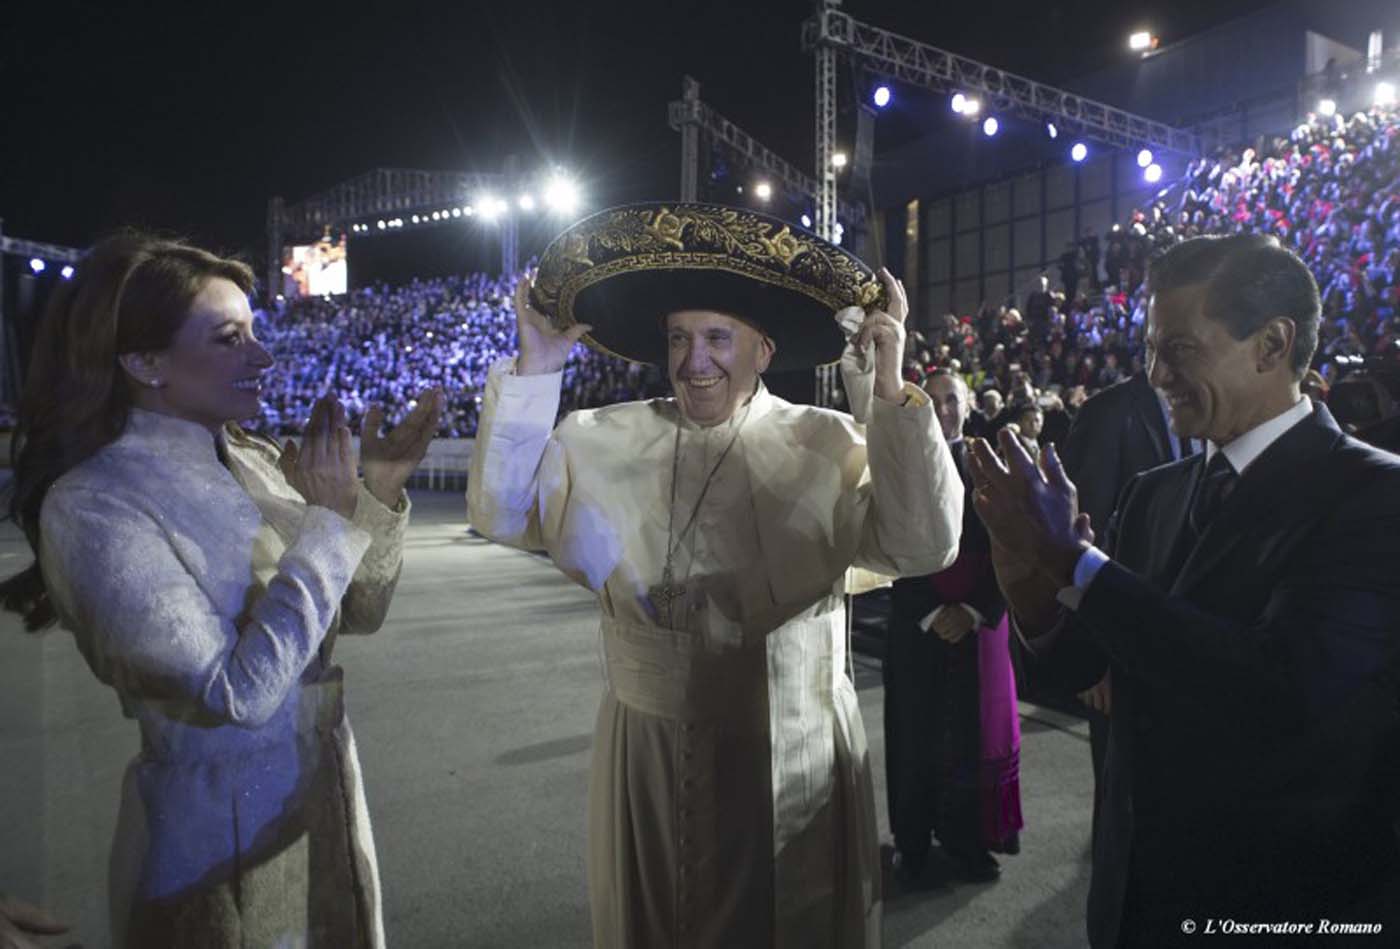 En Video: La llegada del papa Francisco a México